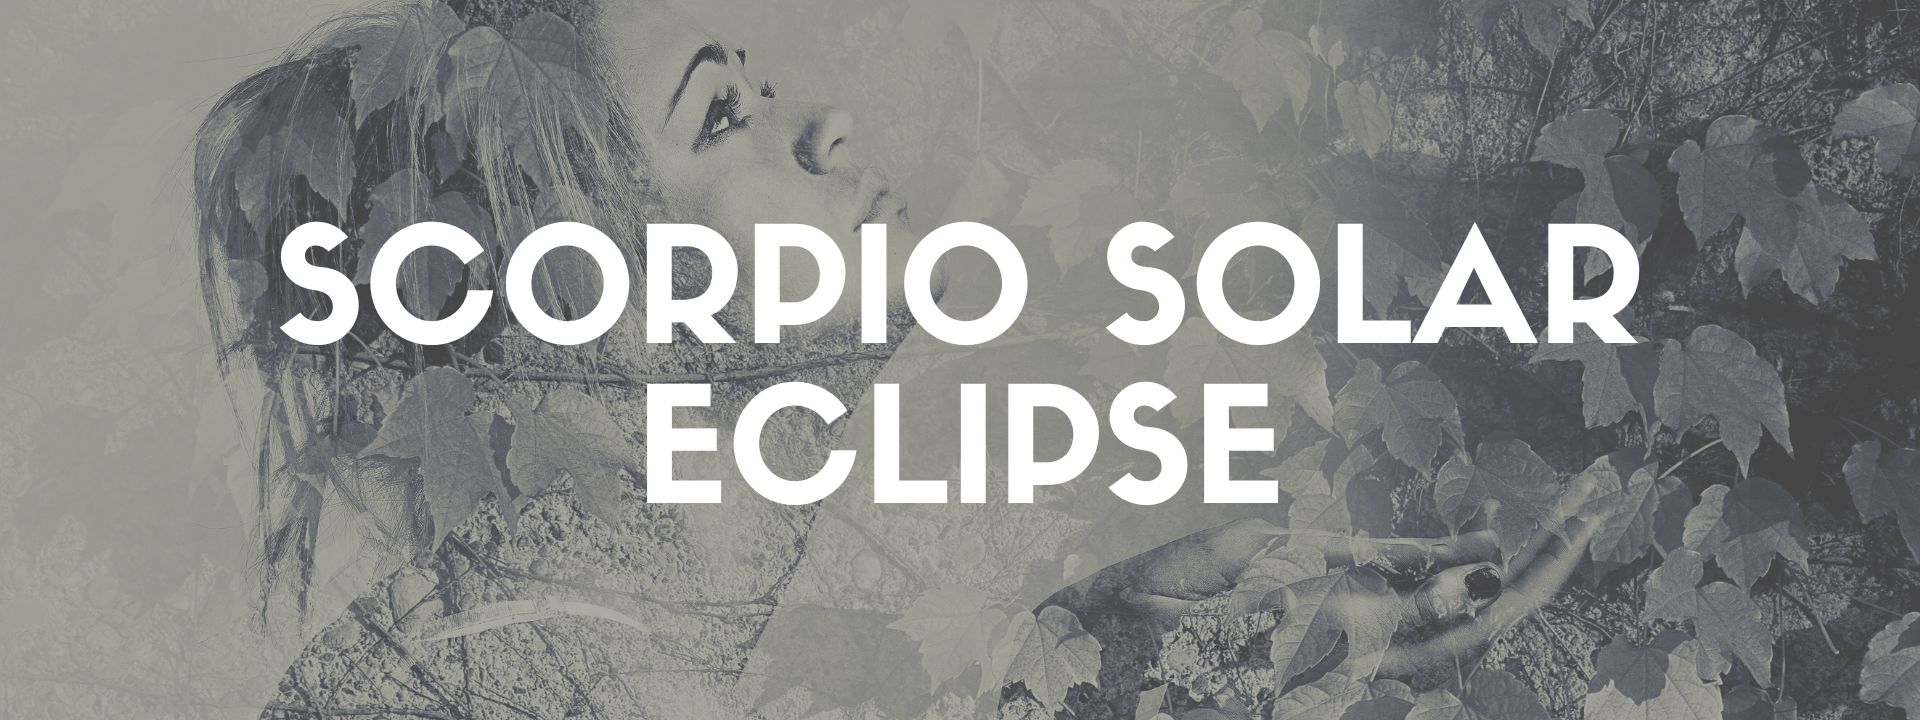 october eclipse 2022 horoscope